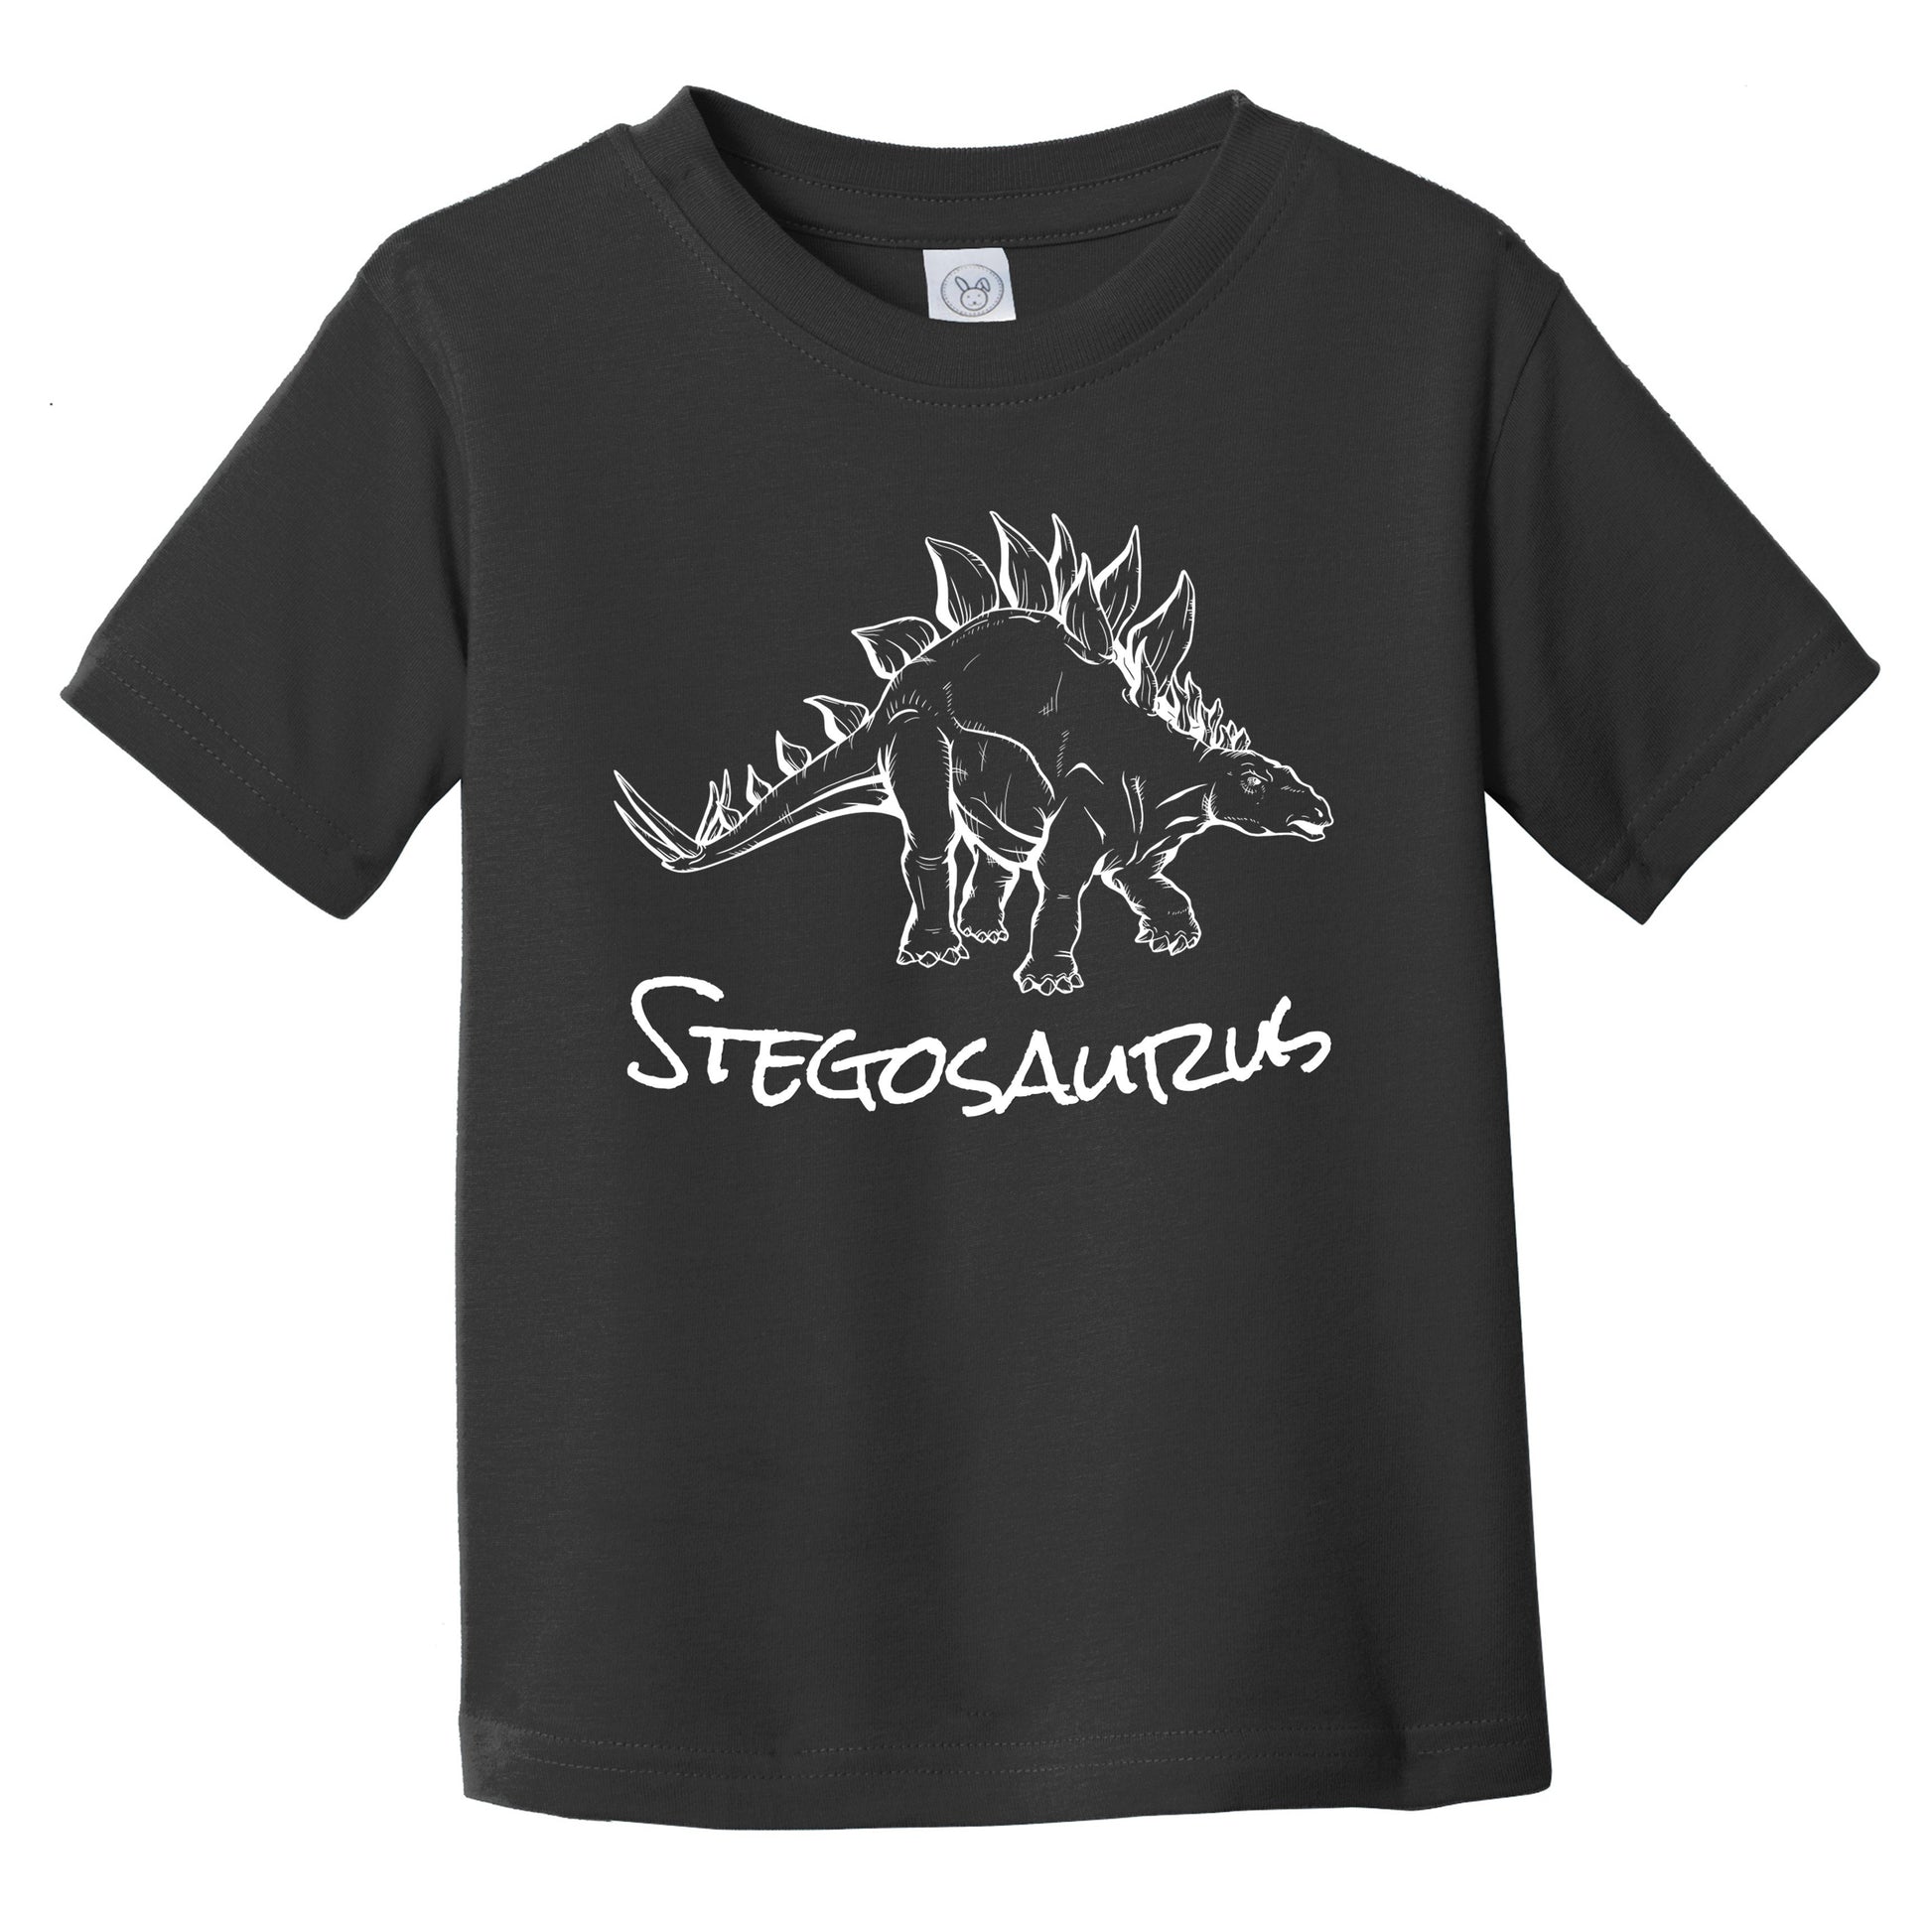 Stegosaurus Sketch Cool Prehistoric Animal Dinosaur Infant Toddler T-Shirt